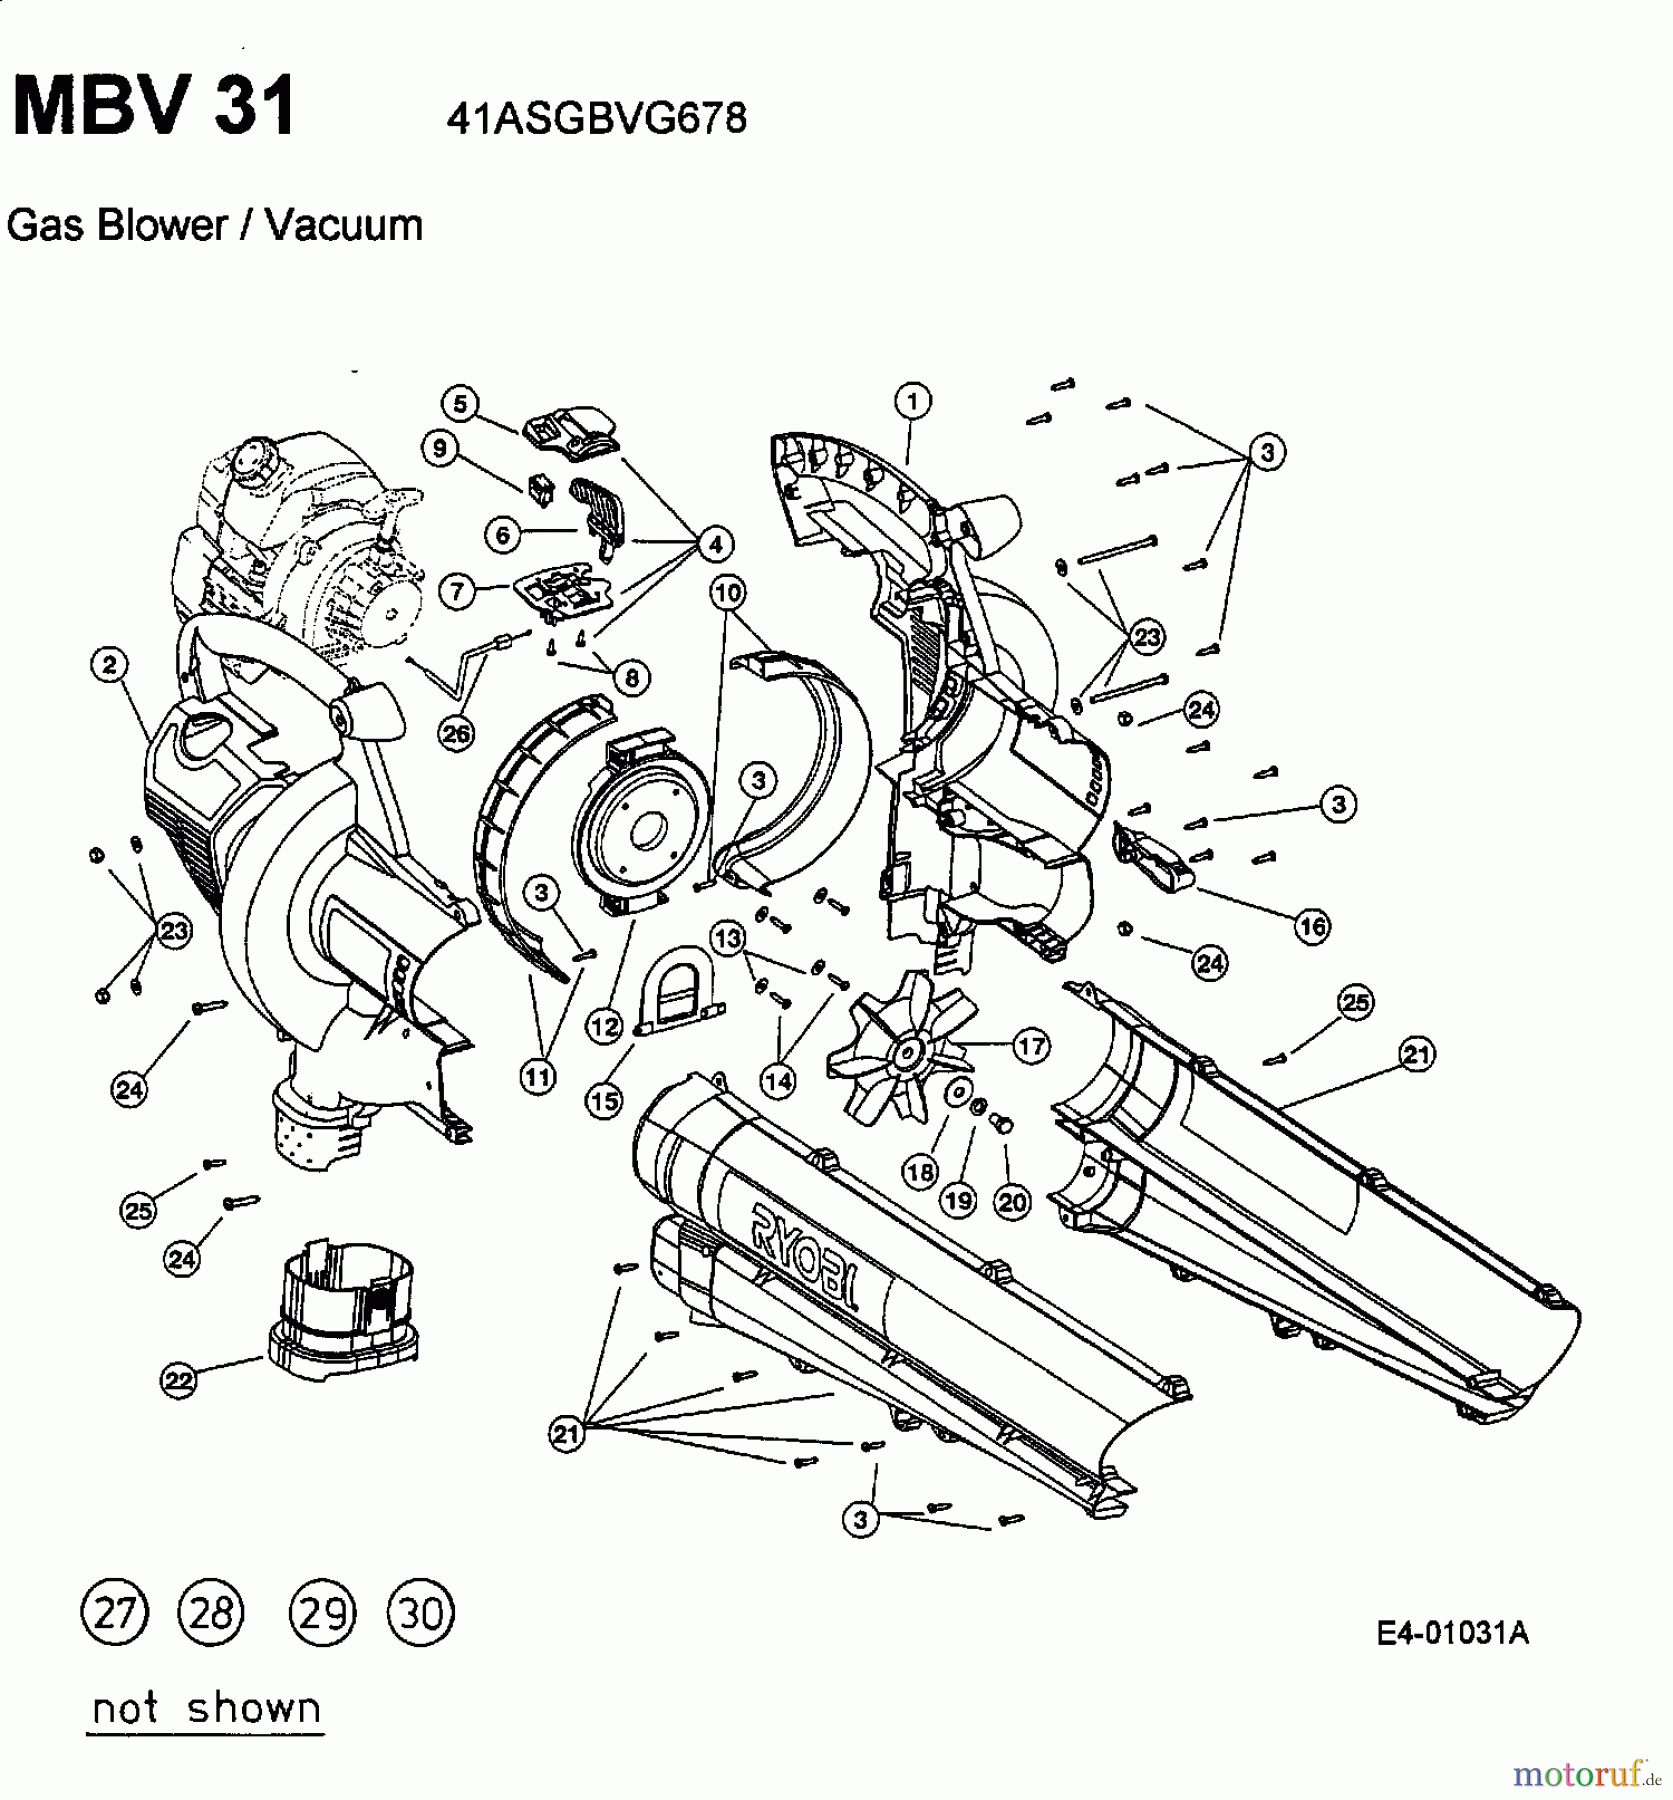  MTD Laubläser, Laubsauger MBV 31 41ASGBVG678  (2002) Grundgerät